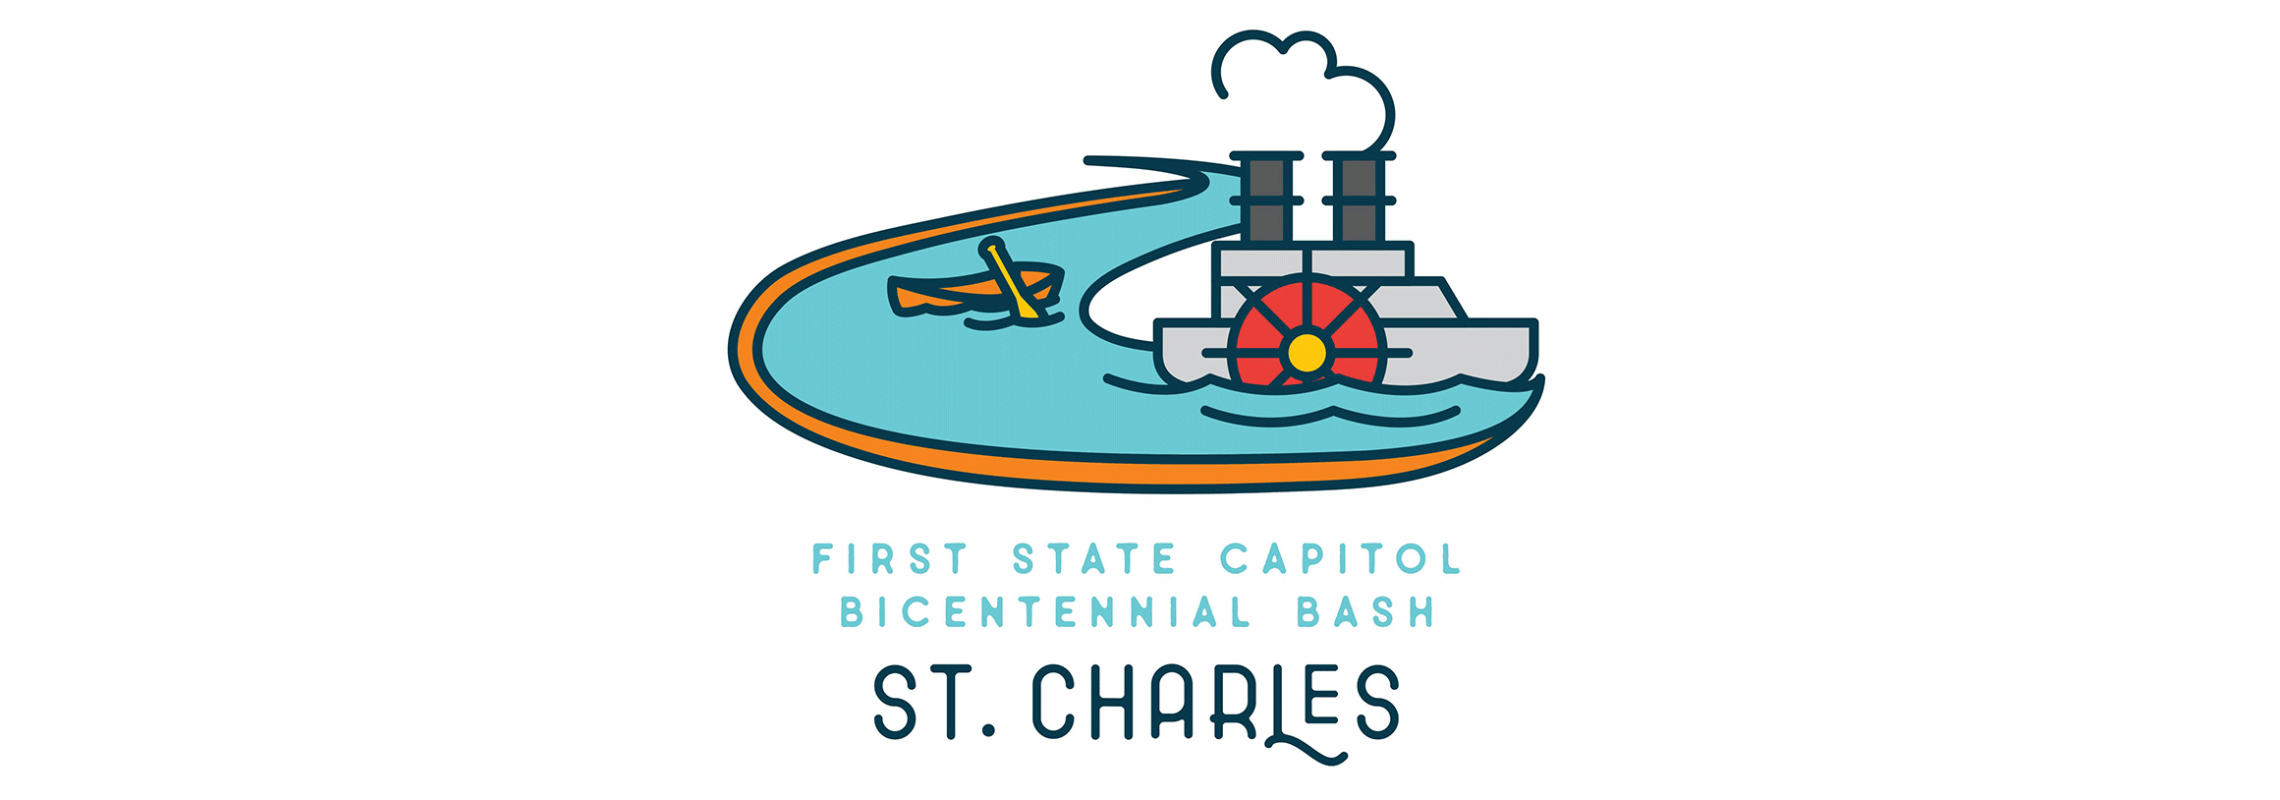 First State Capitol Bicentennial Bash